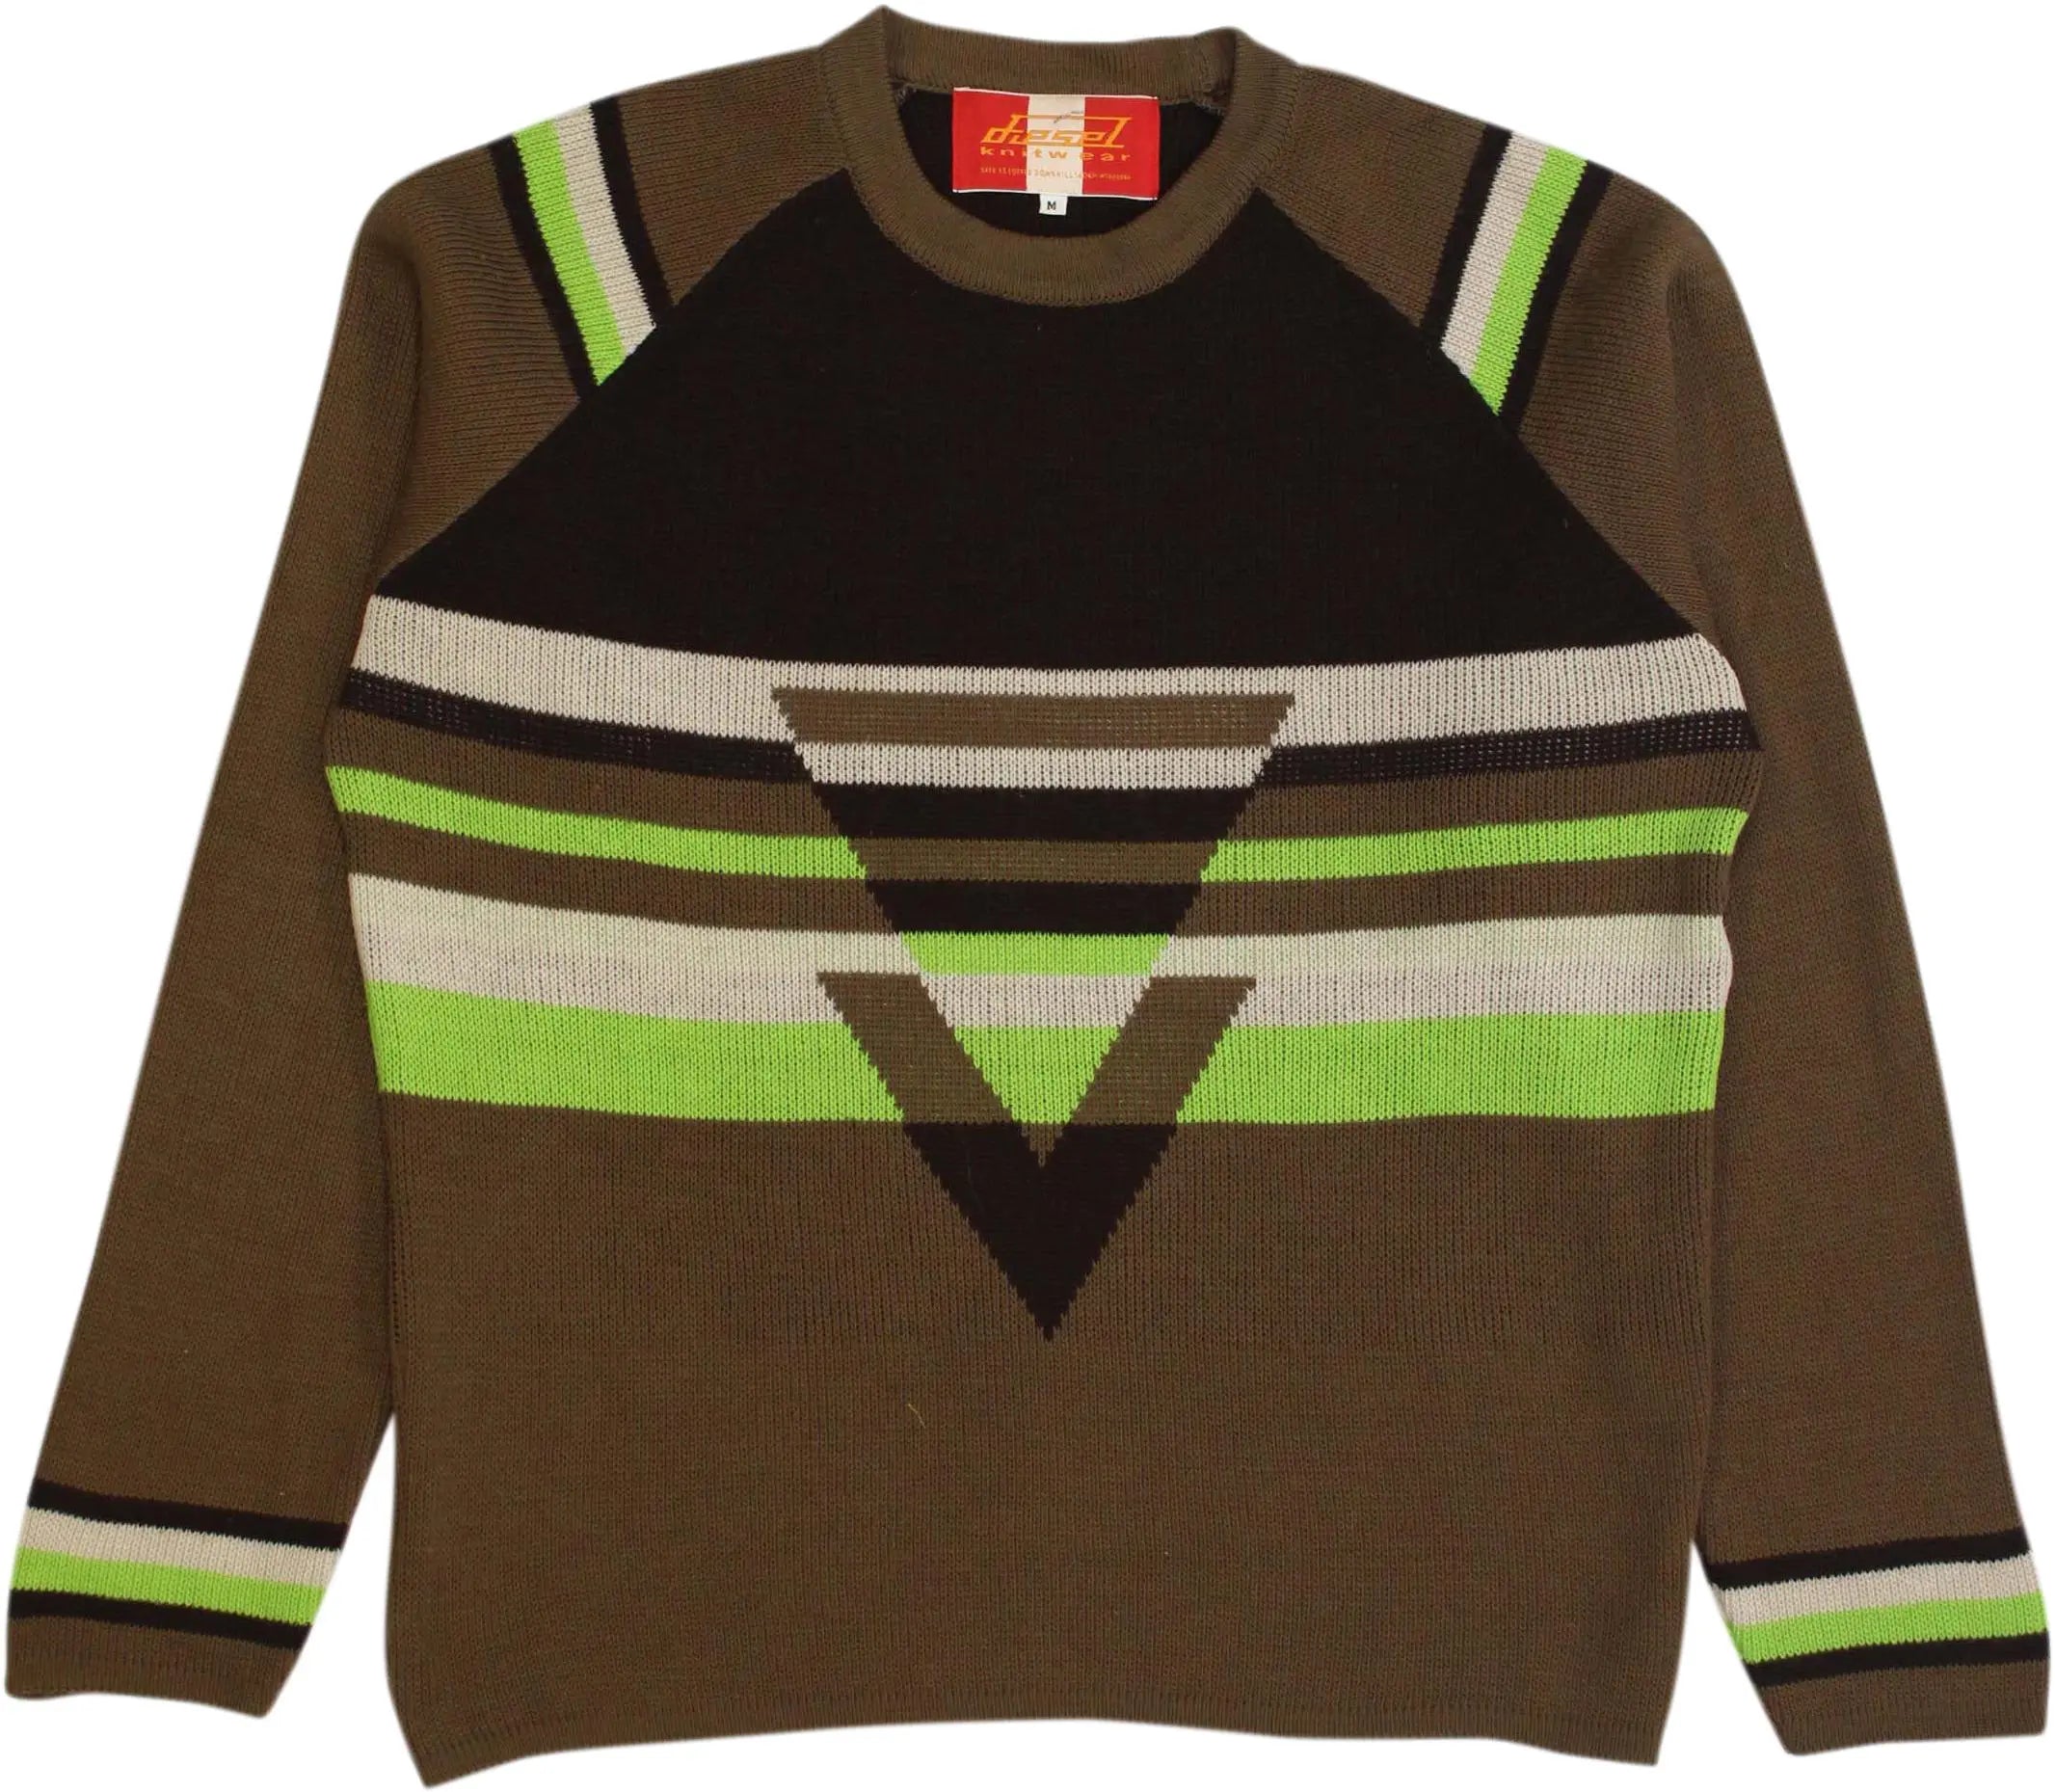 Diesel - 90s Diesel Speedfreaks Knitted Sweater- ThriftTale.com - Vintage and second handclothing